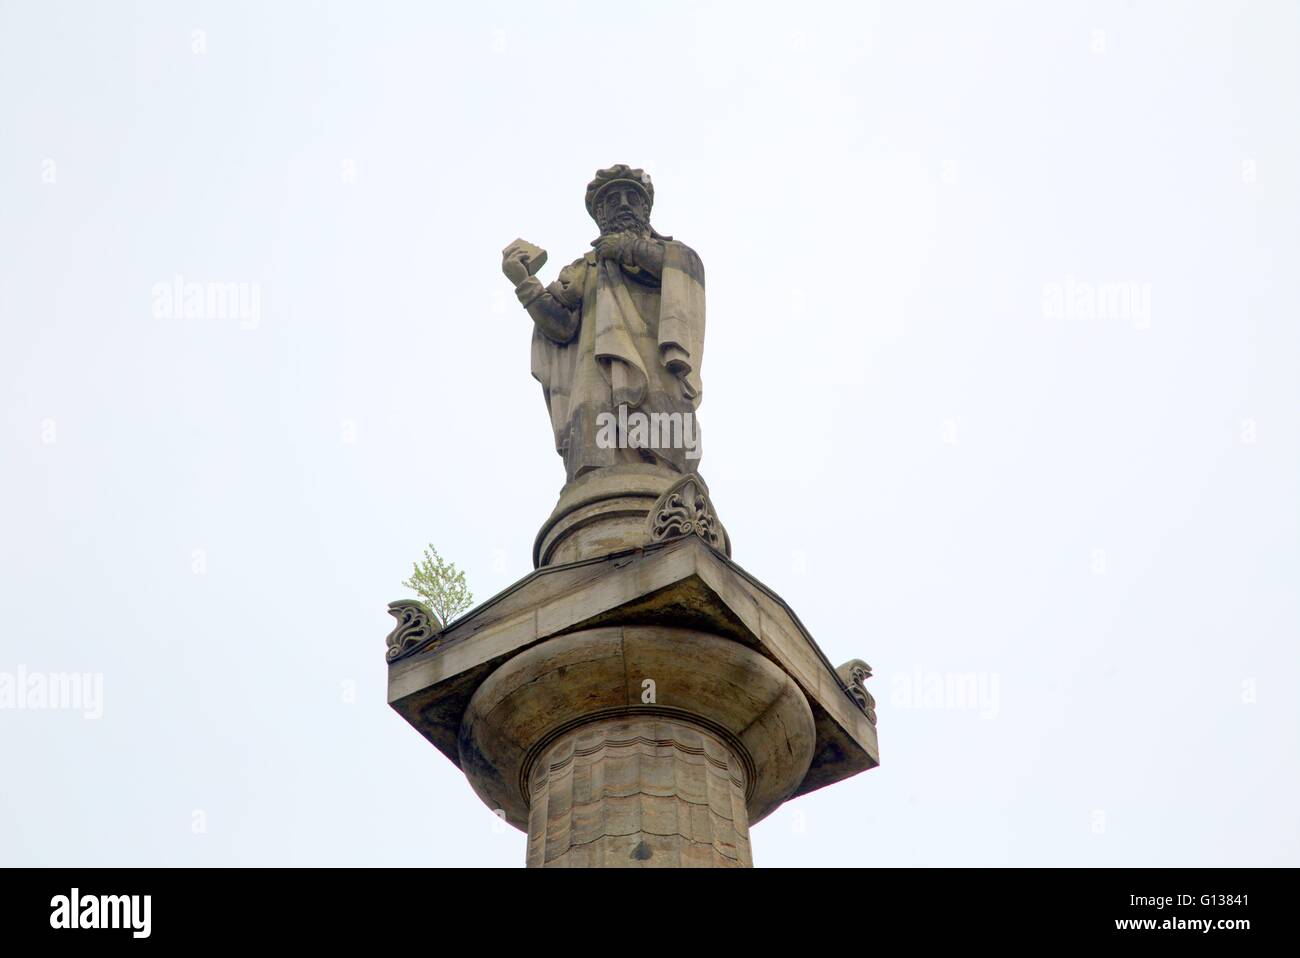 Tumba y estatua de monumento en conmemoración de la Necrópolis de John Knox calvinista, Glasgow. Escocia,U.K. Foto de stock